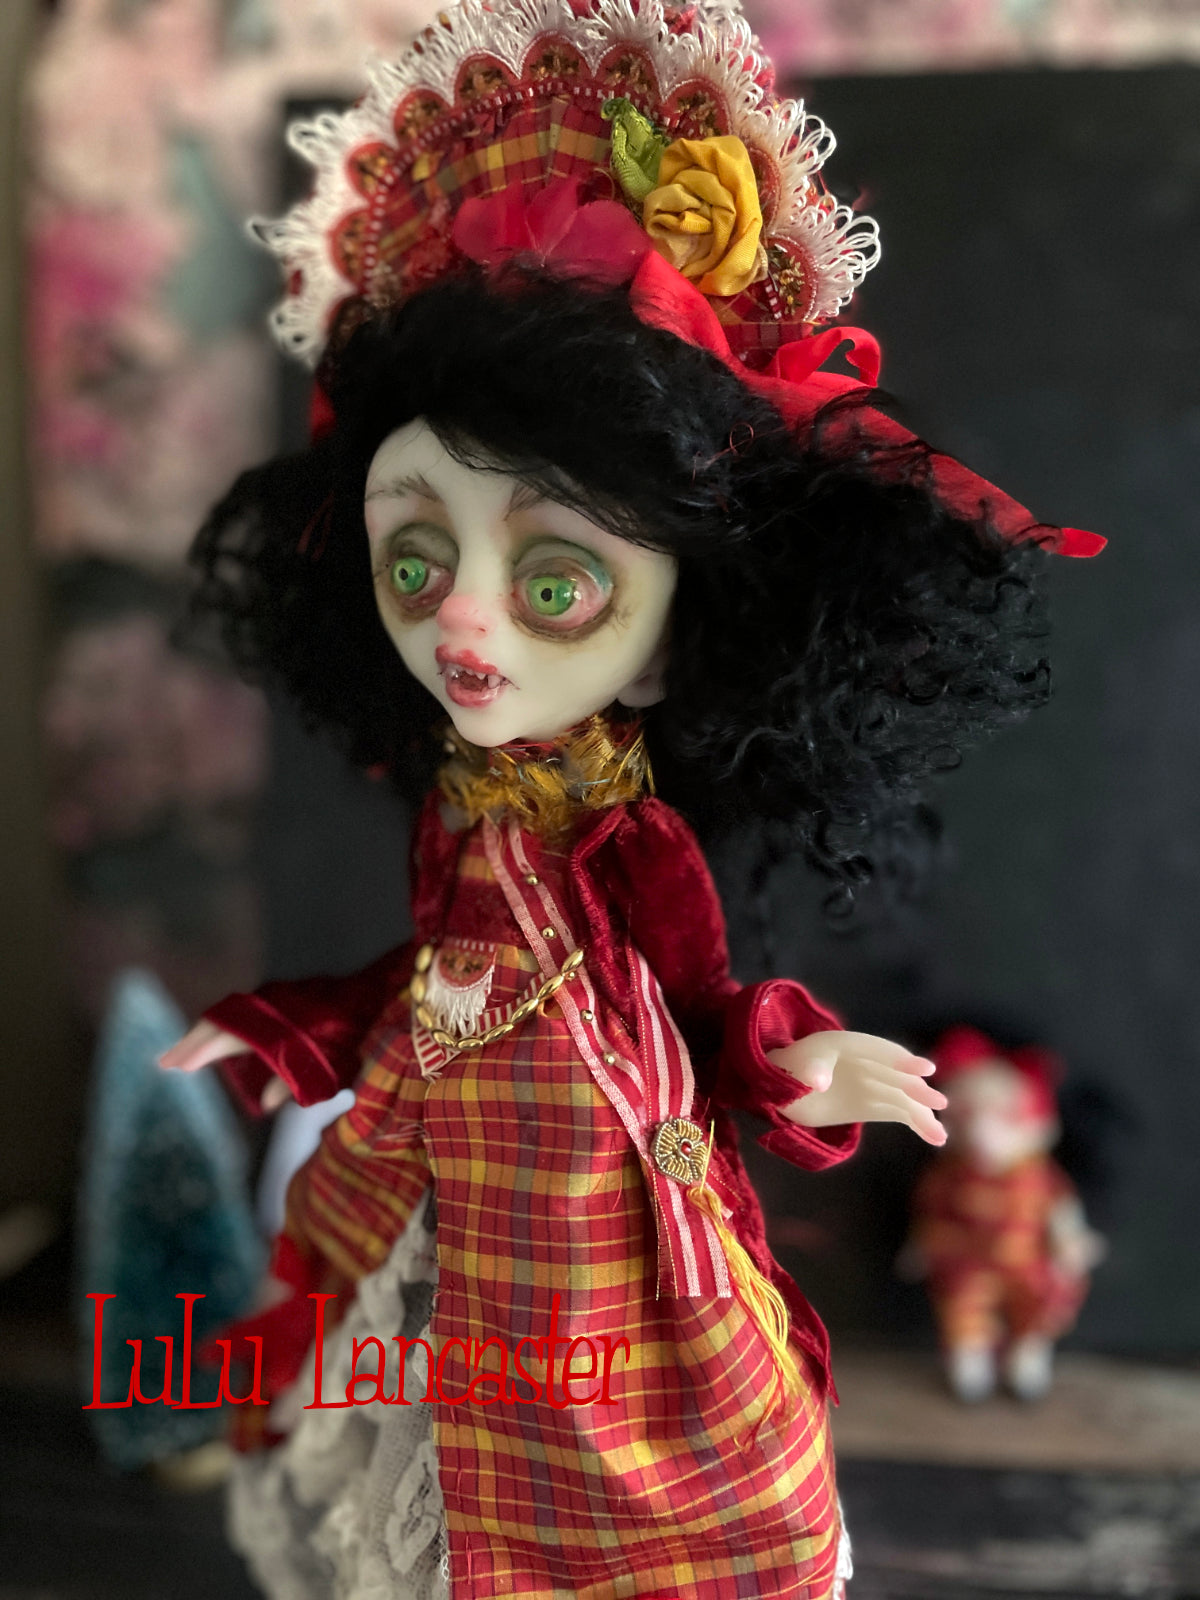 Dresden December and Dolly the Vampire LuLu's Holiday Original LuLu Lancaster Art Doll